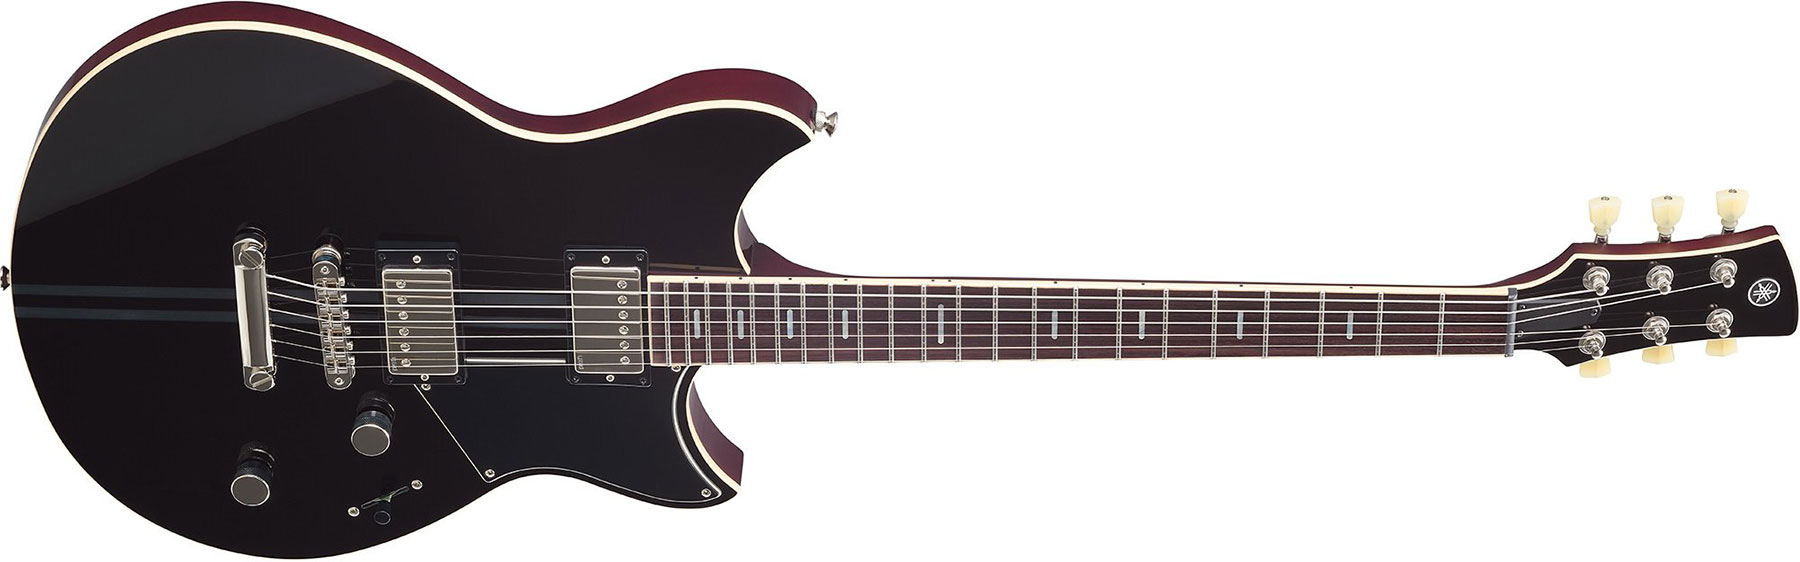 Yamaha Rss20 Revstar Standard Hh Ht Rw - Black - Guitarra eléctrica de doble corte - Variation 1